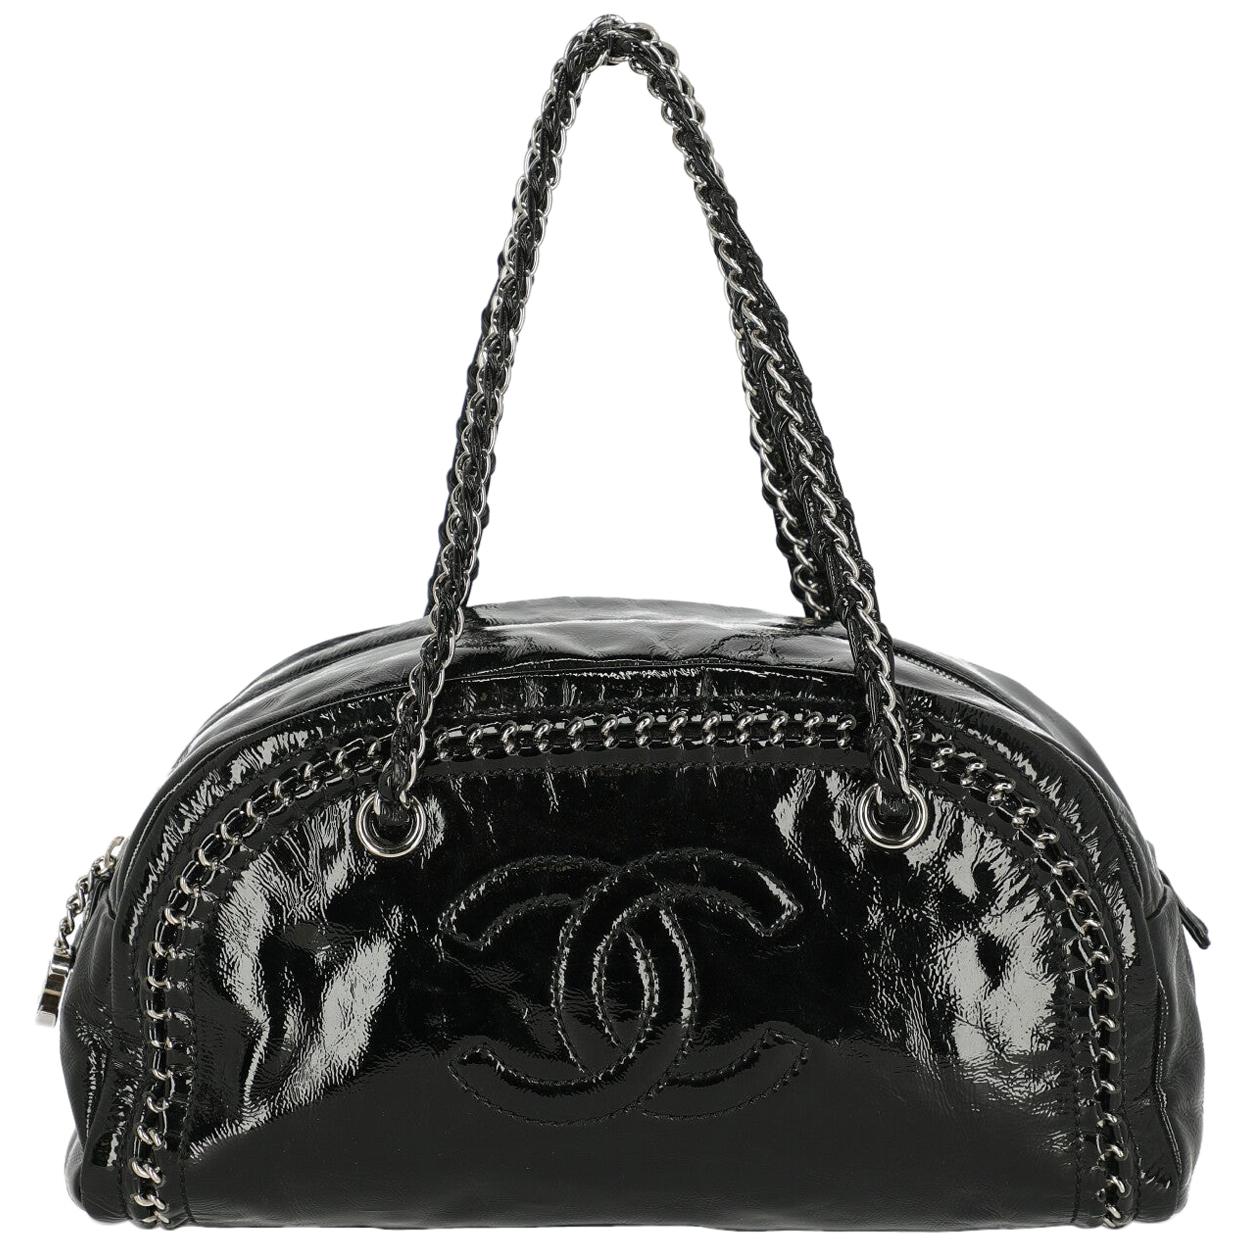 Chanel Woman Handbag Black Leather For Sale